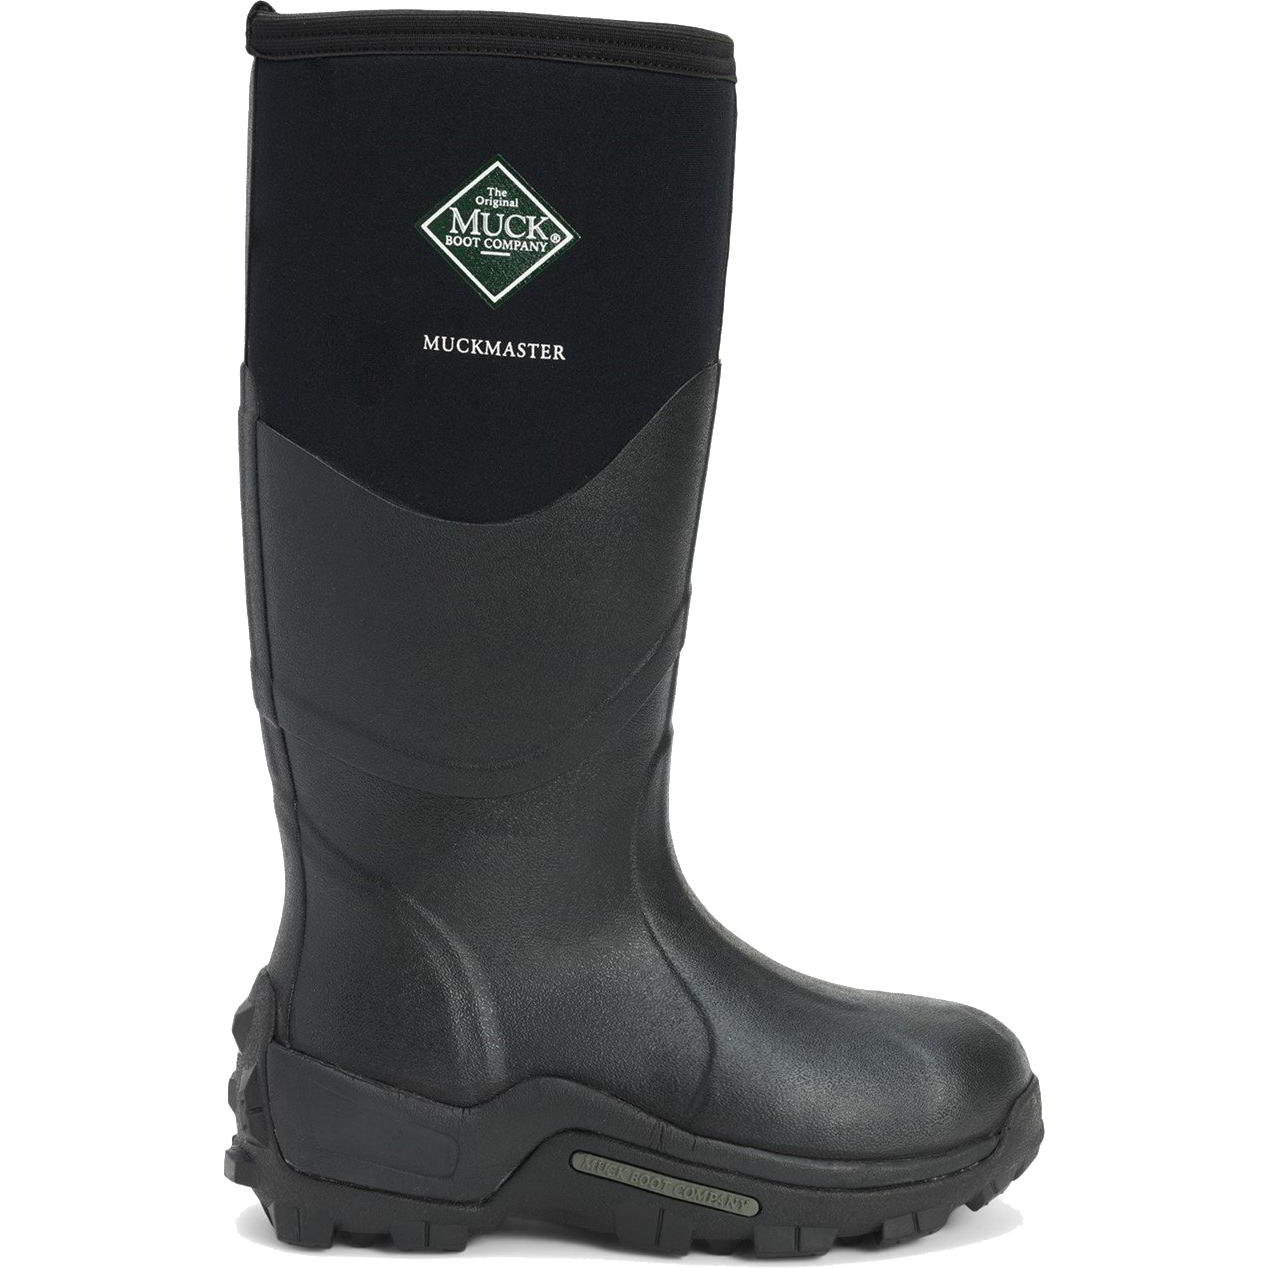 Muck Boots Men's Women's Muck Master Neoprene Wellies Rain Boots - UK 7